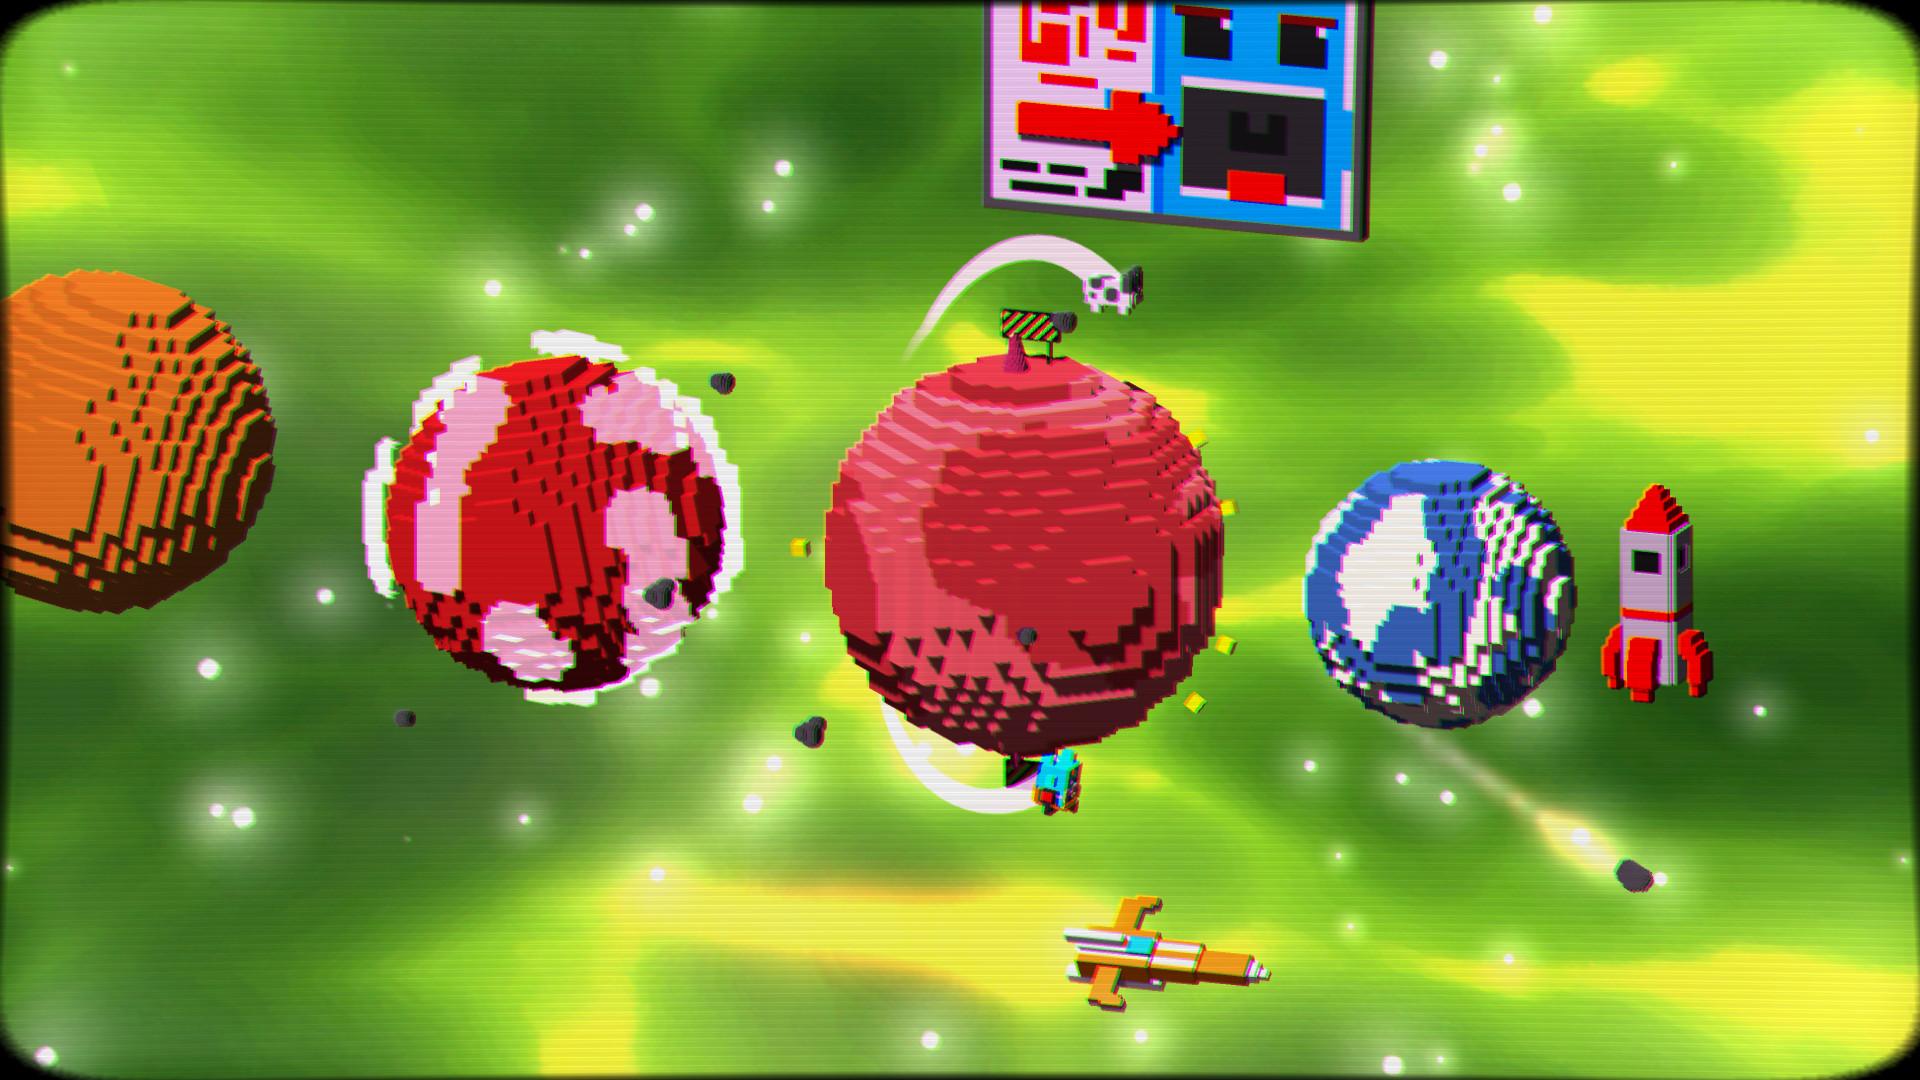 Screenshot №5 from game Cosmic Leap